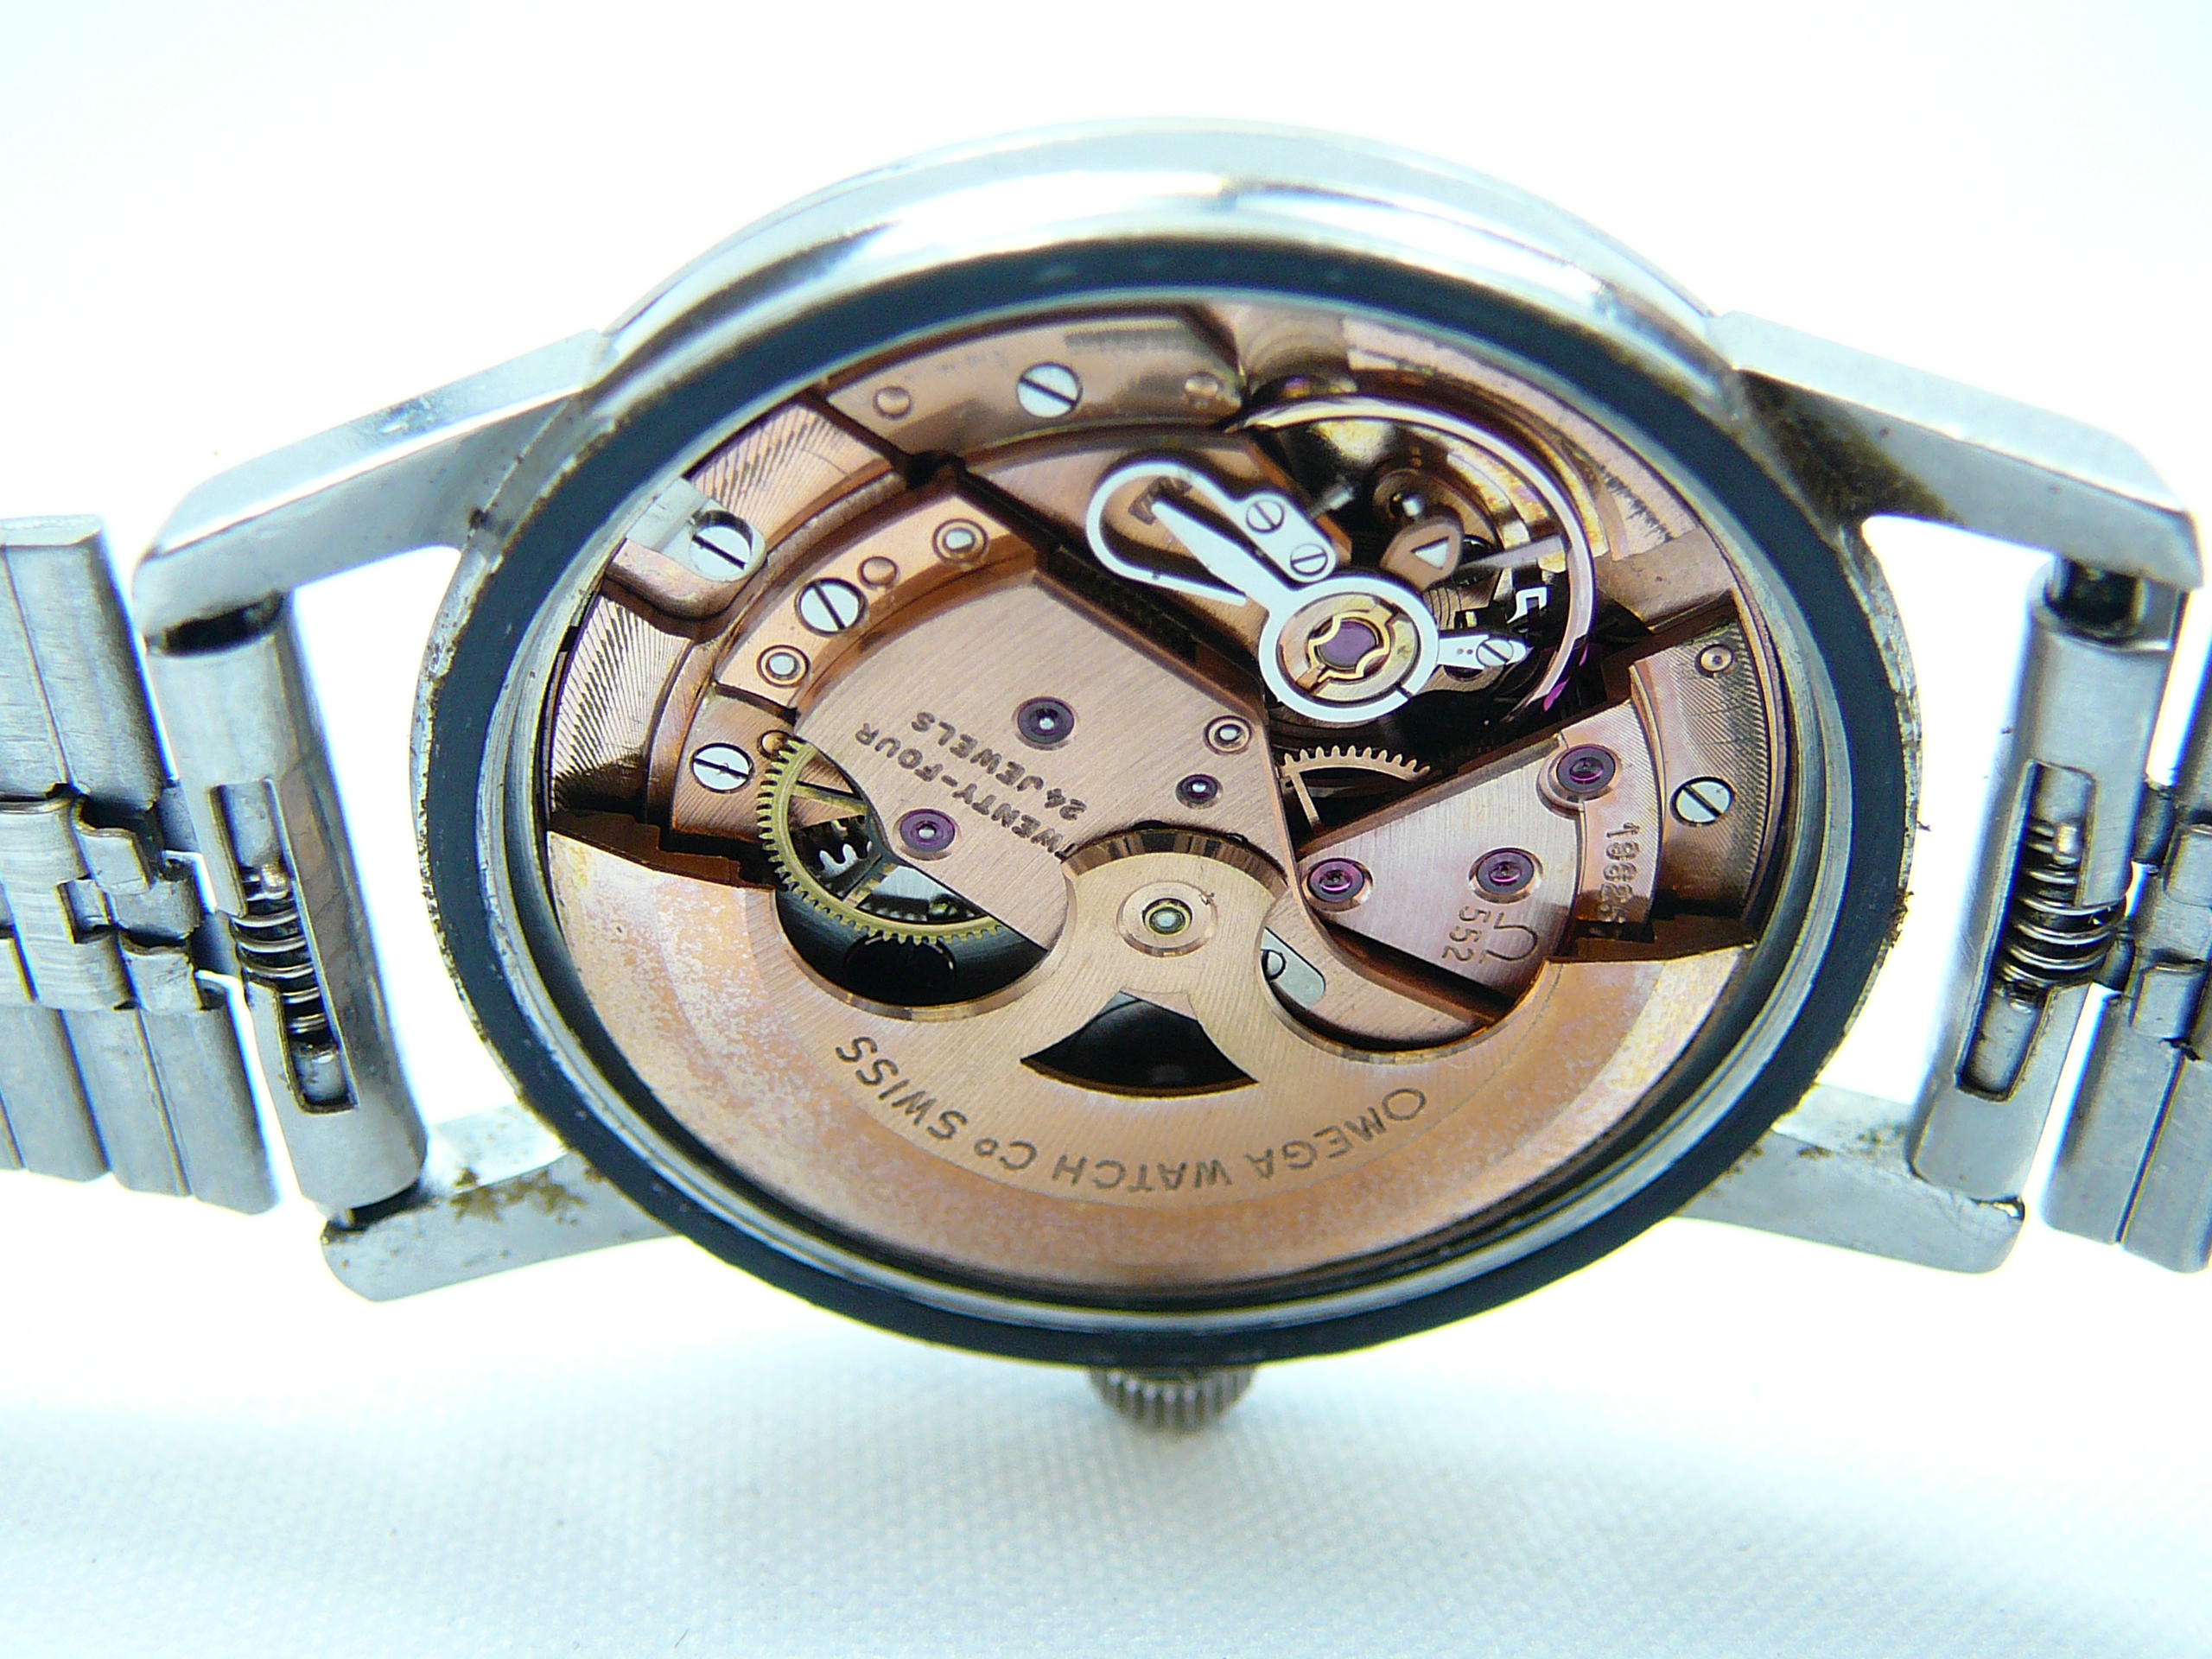 Gents Vintage Omega Wrist Watch - Image 6 of 6